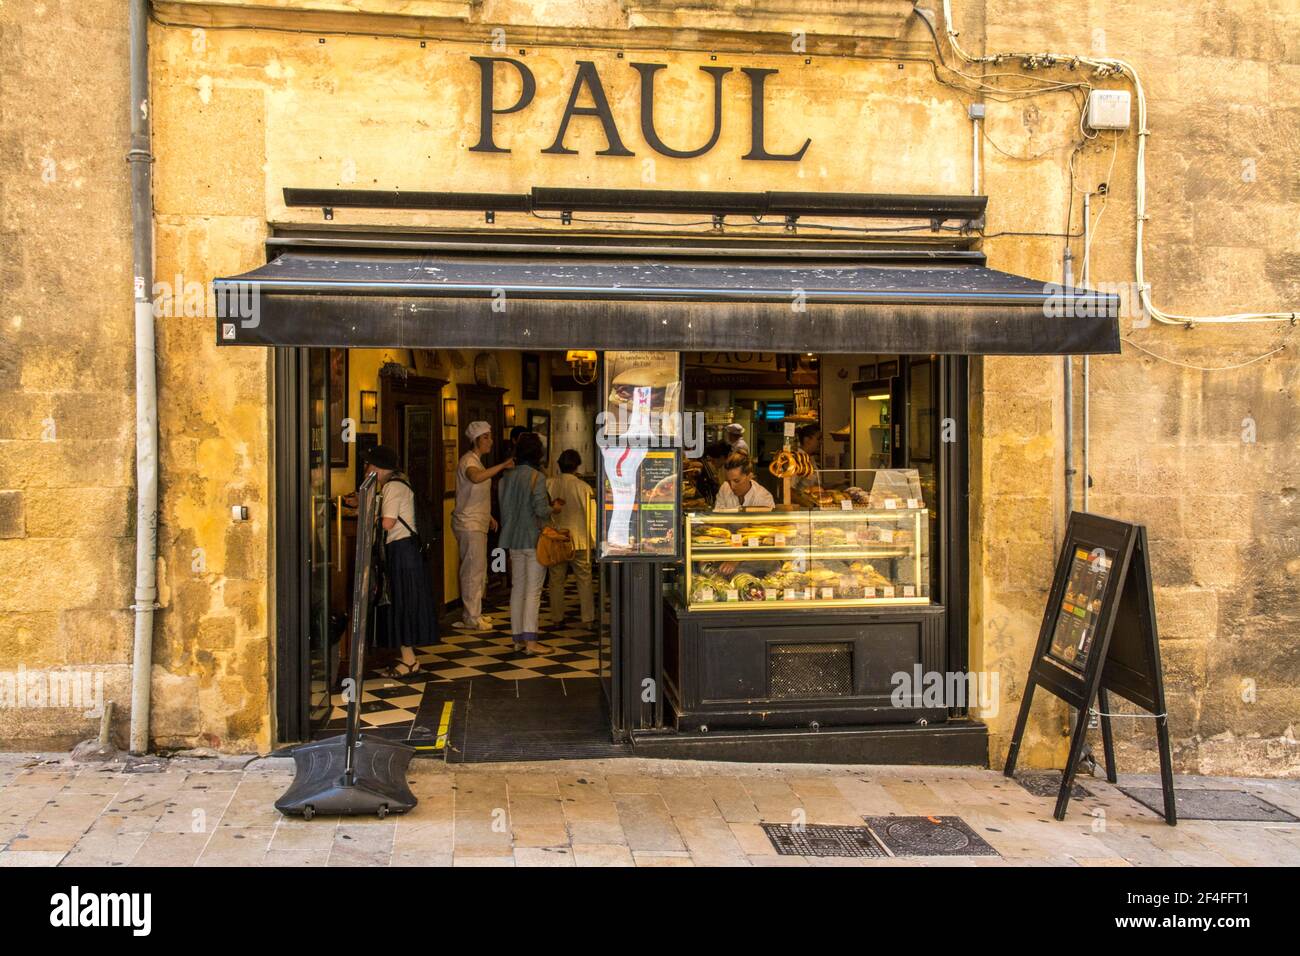 Bäckerei Paul, Sandwich, Aix en provence, Provence, Südfrankreich, Frankreich Stockfoto